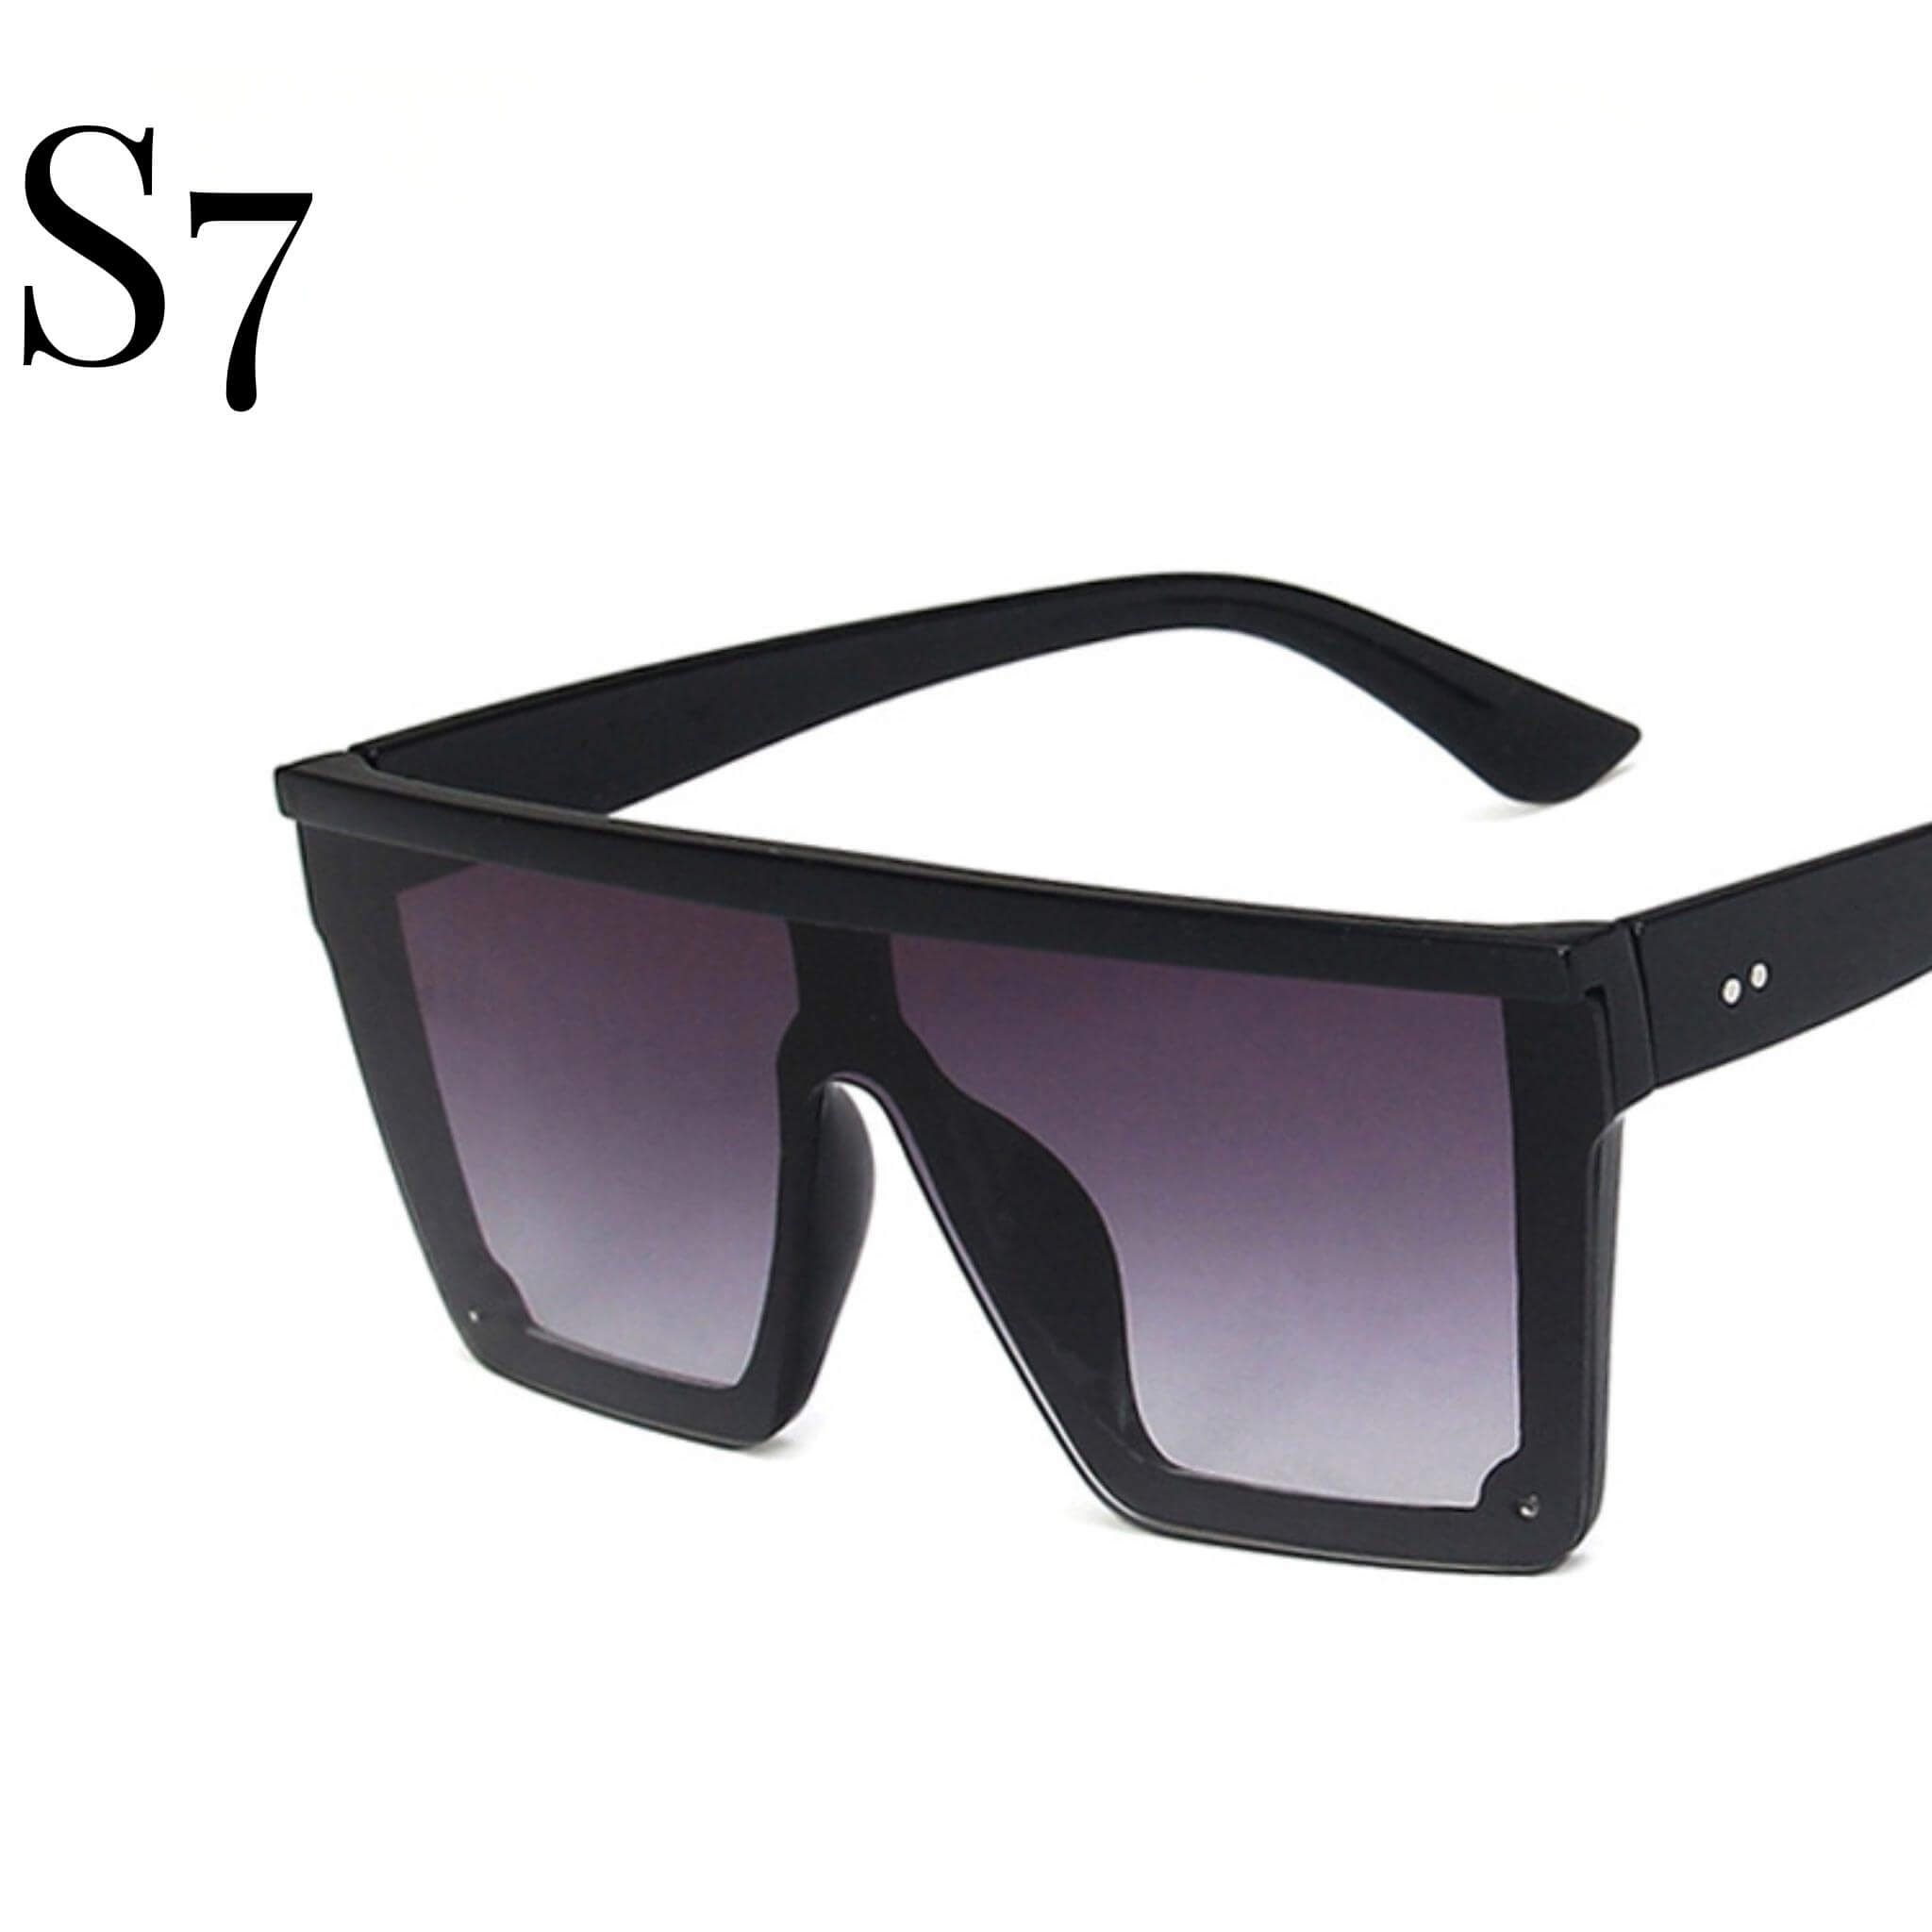 Simple Large Frame One-Piece Sunglasses  UponBasics Black-S7  